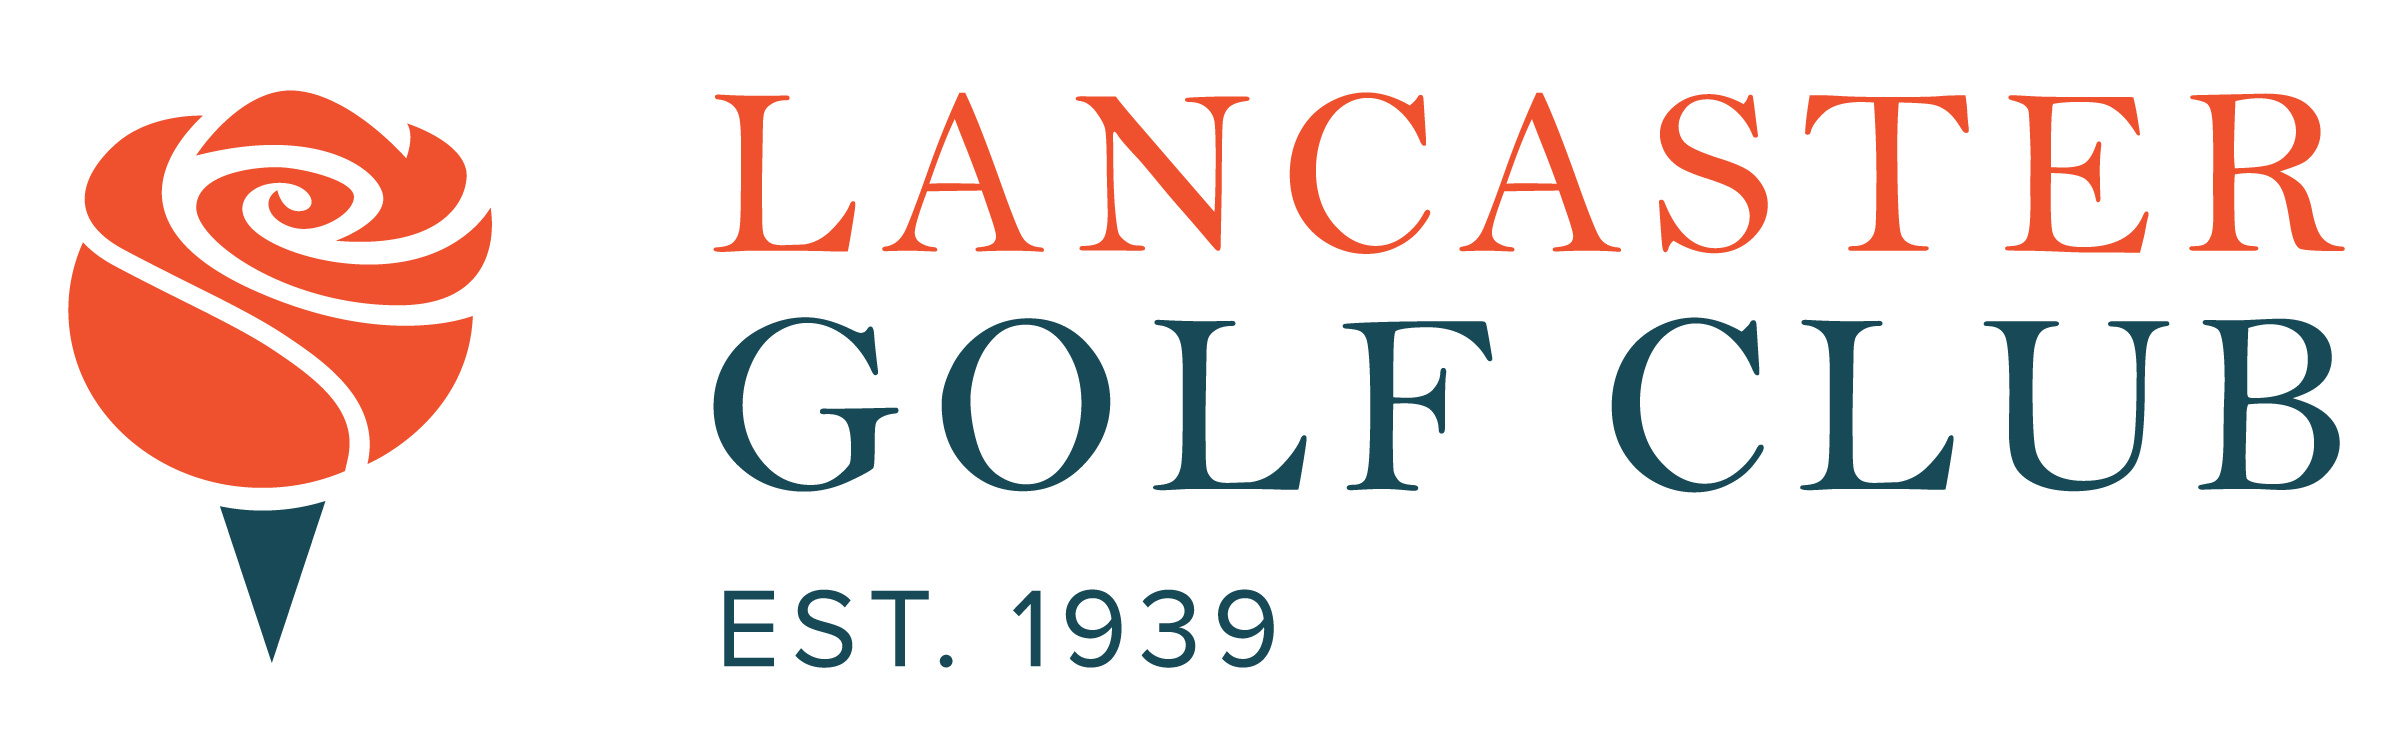 Lancaster Golf Club Est. 1939